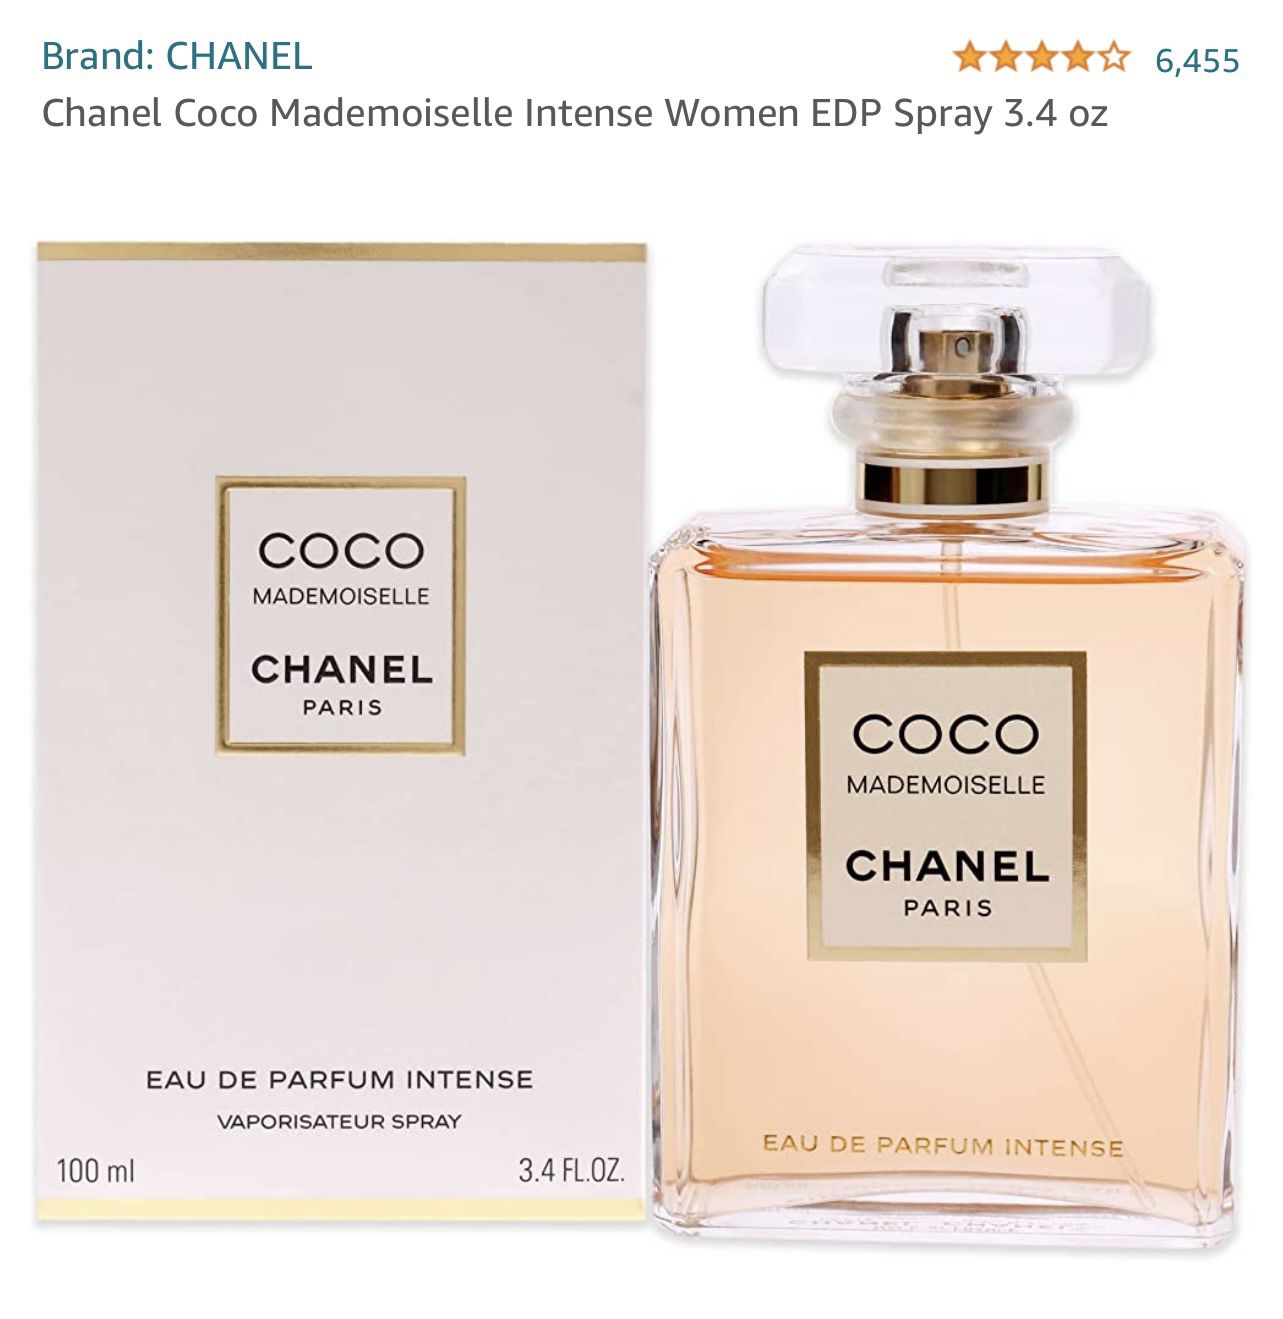 mademoiselle chanel travel size perfume